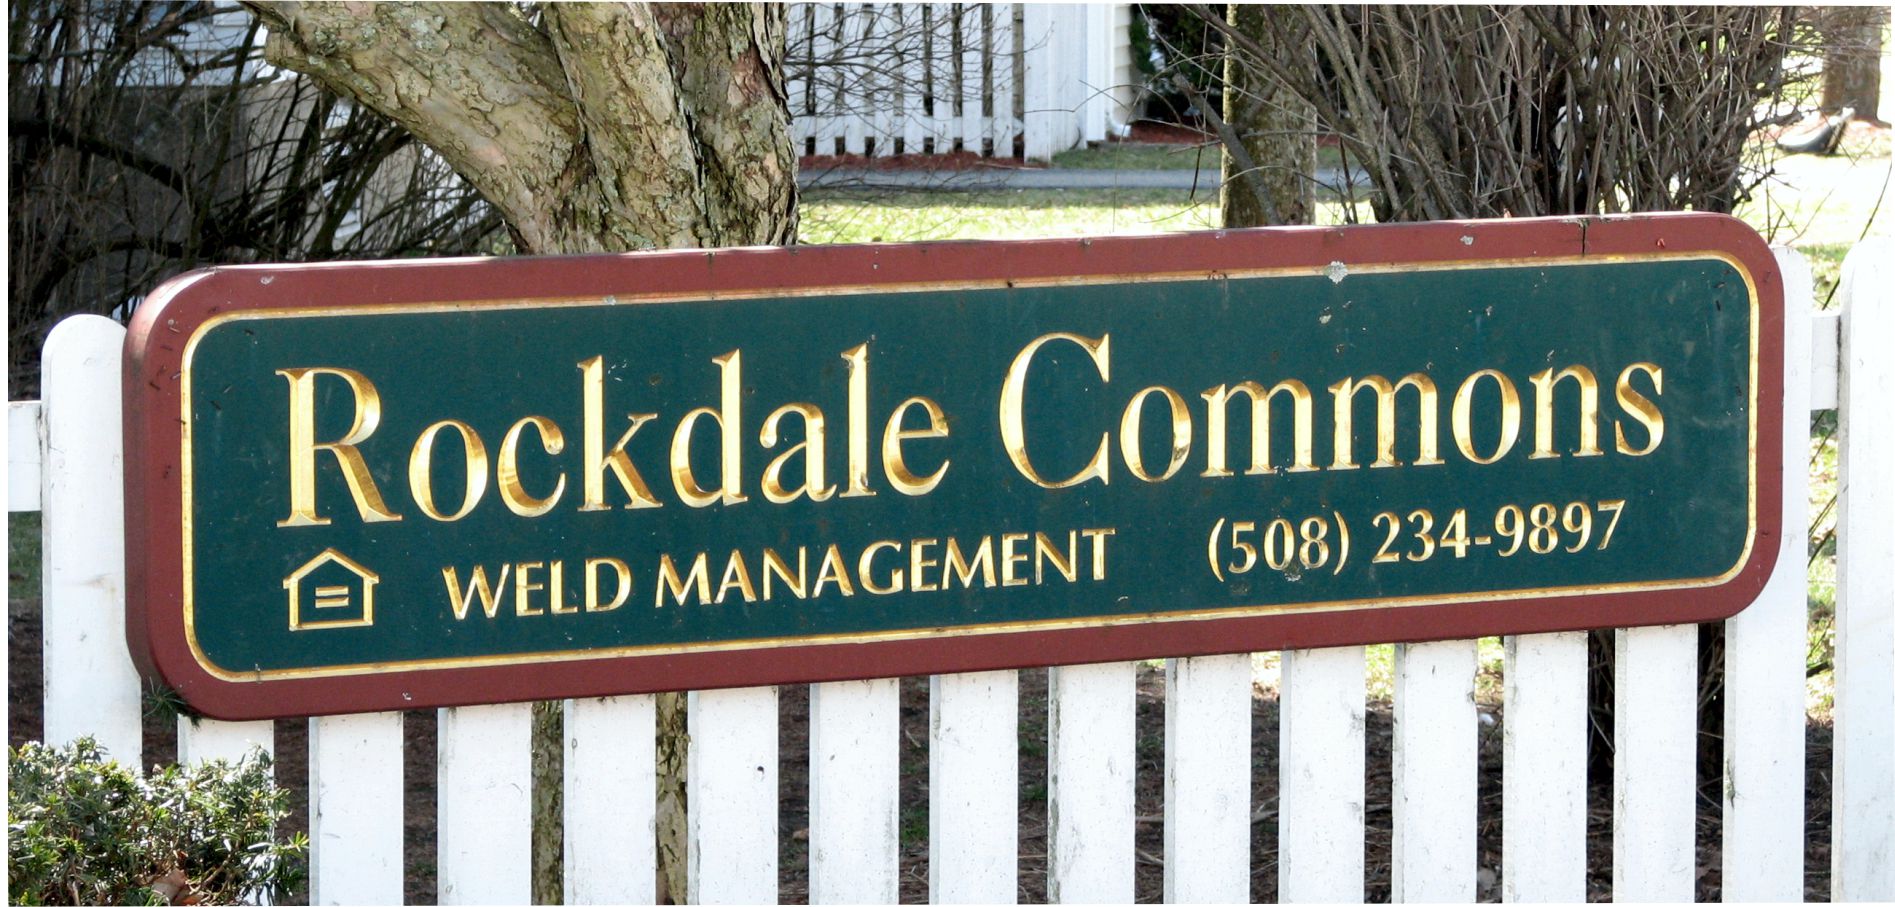 Rockdale Commons